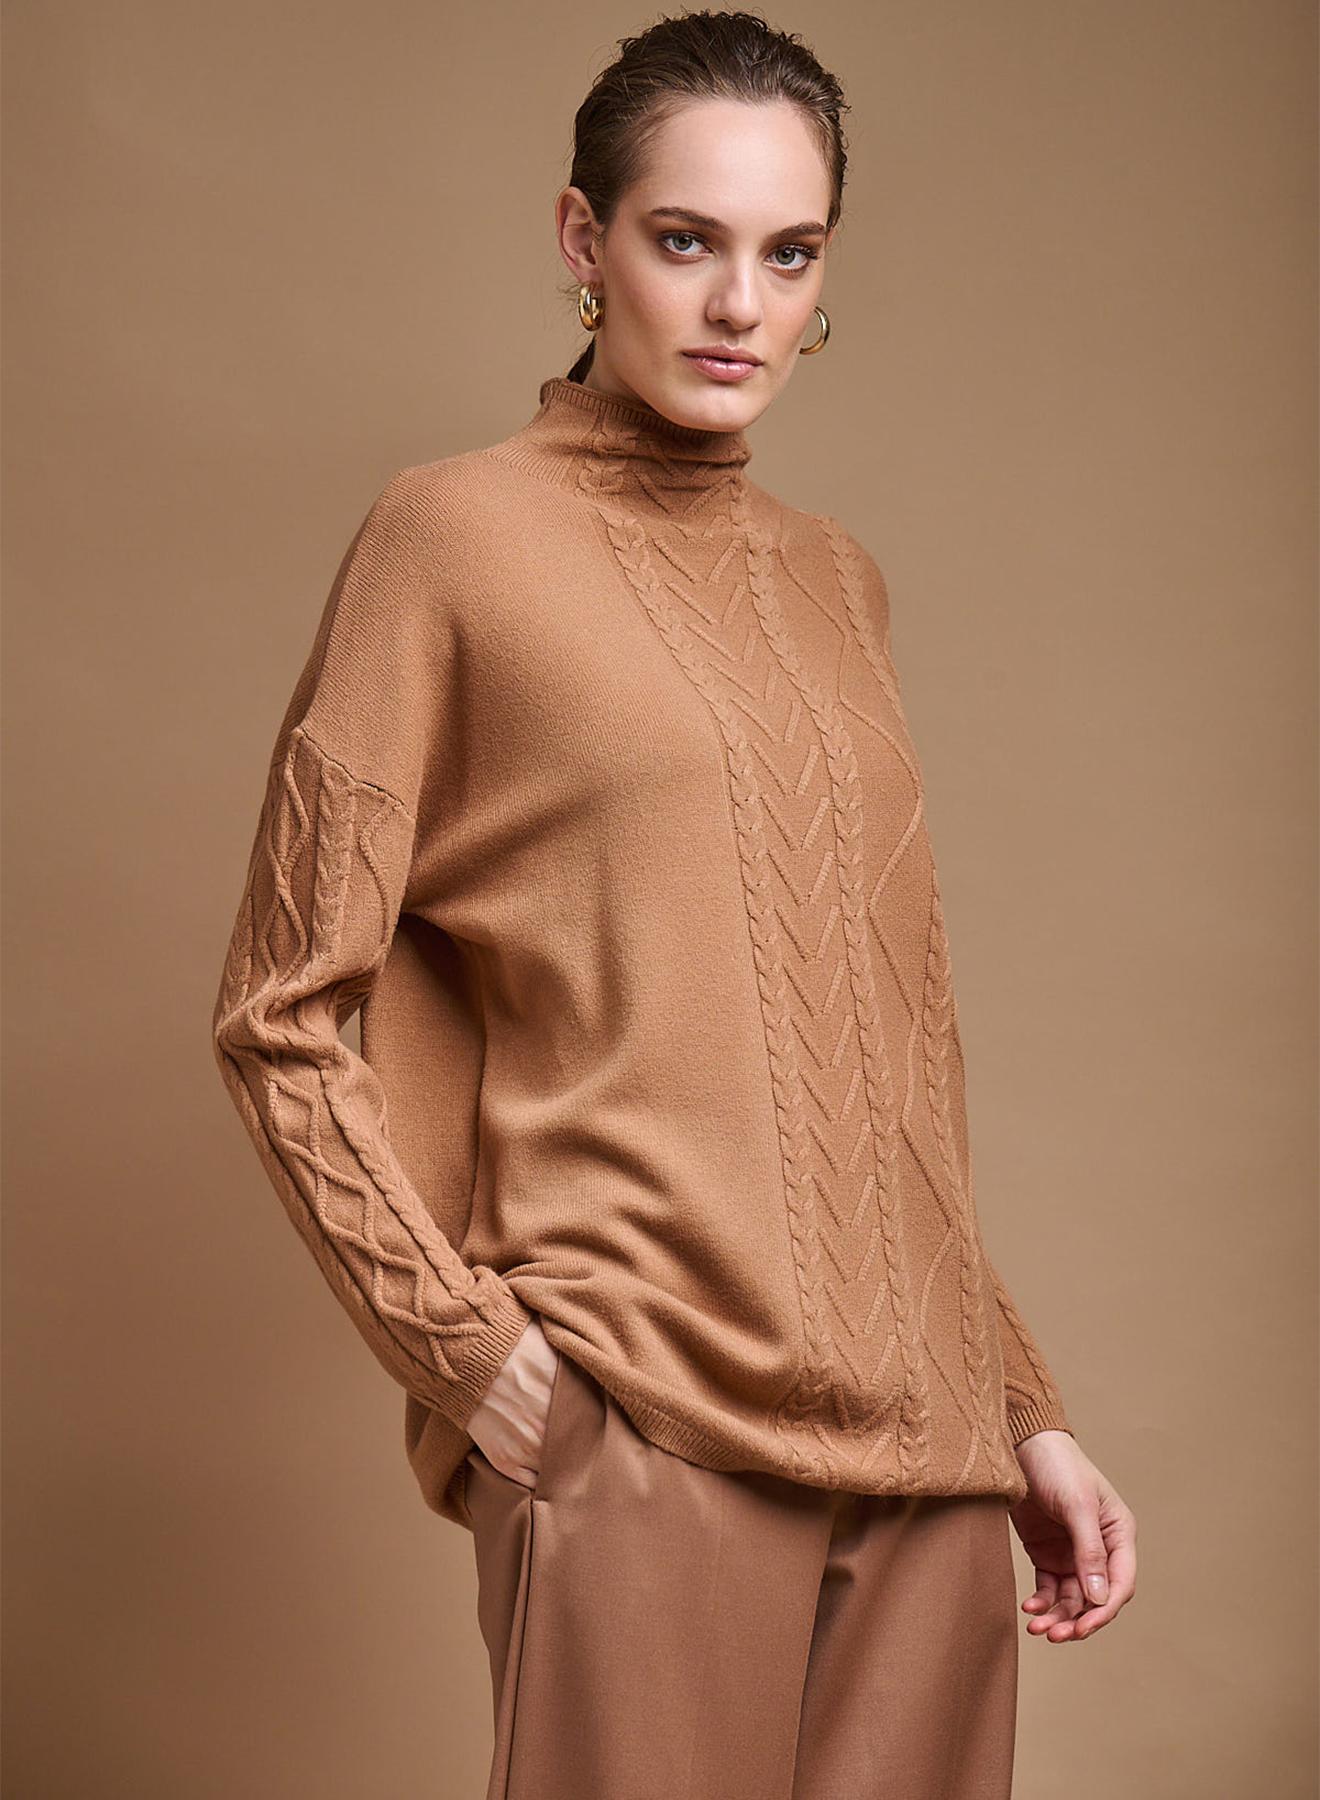 Half-turtleneck sweater with textured details - 1